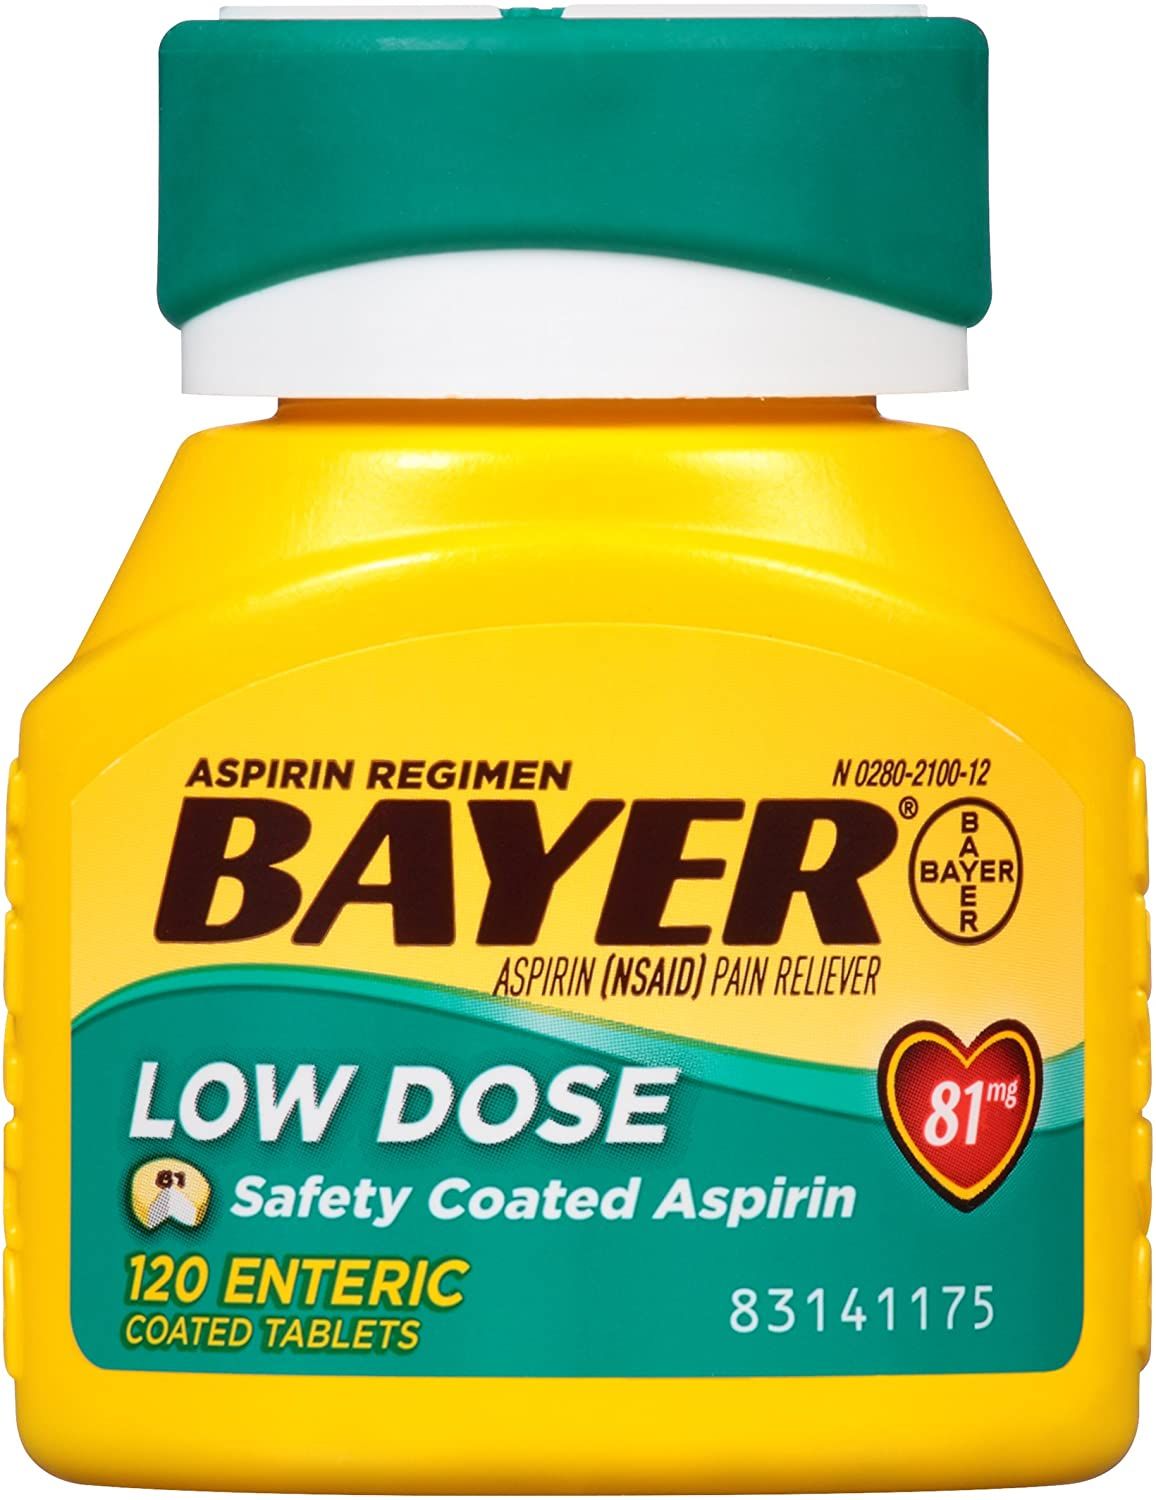 DISCBayer Low Dose Aspirin Tablets, 81 mg - 120 ct